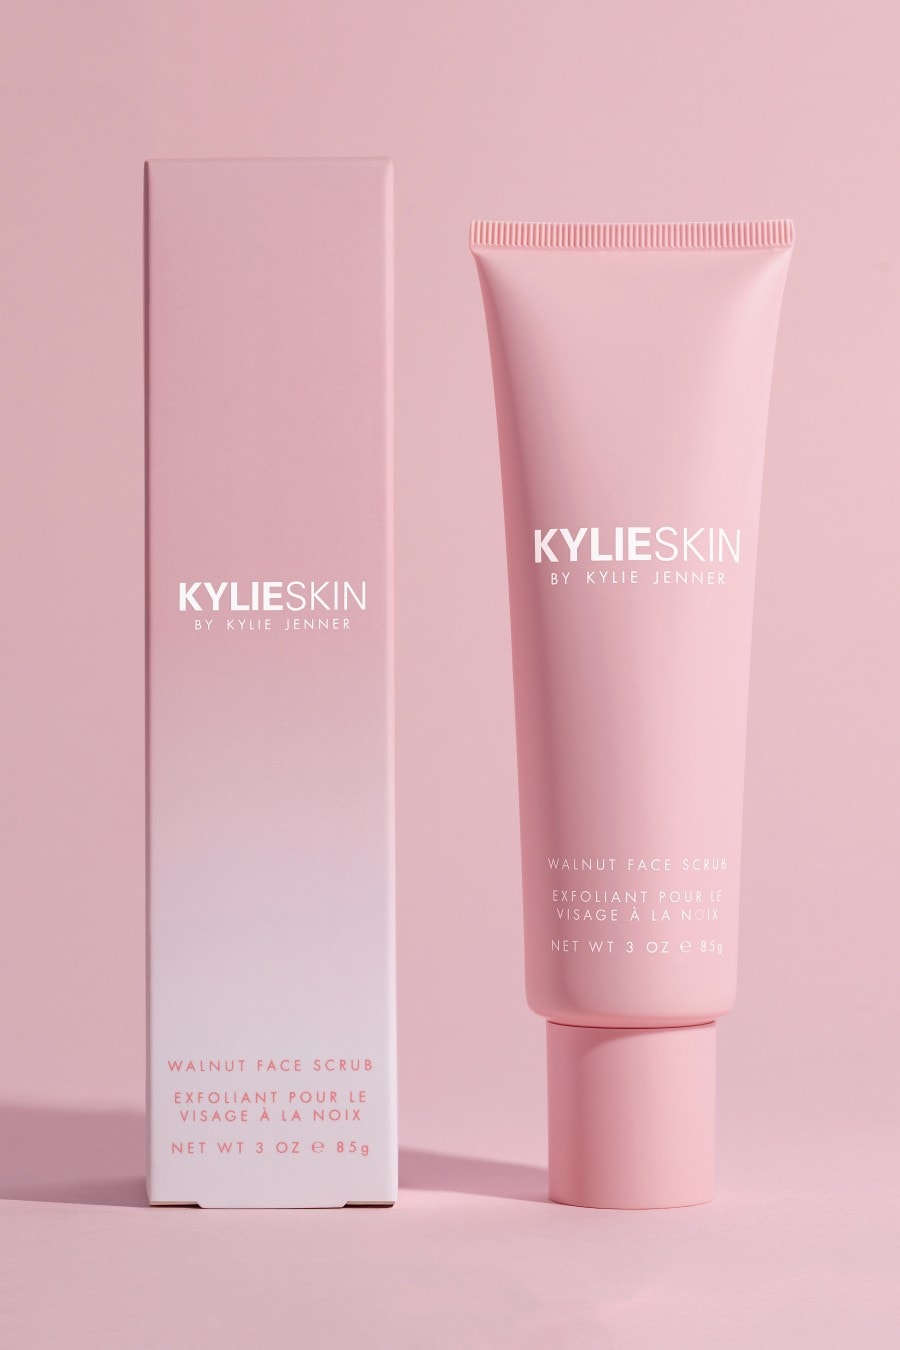 Kylie Jenner Kylie Skin Skincare Range Restock Face Body Wash Moisturizer Lip Scrub Balm 